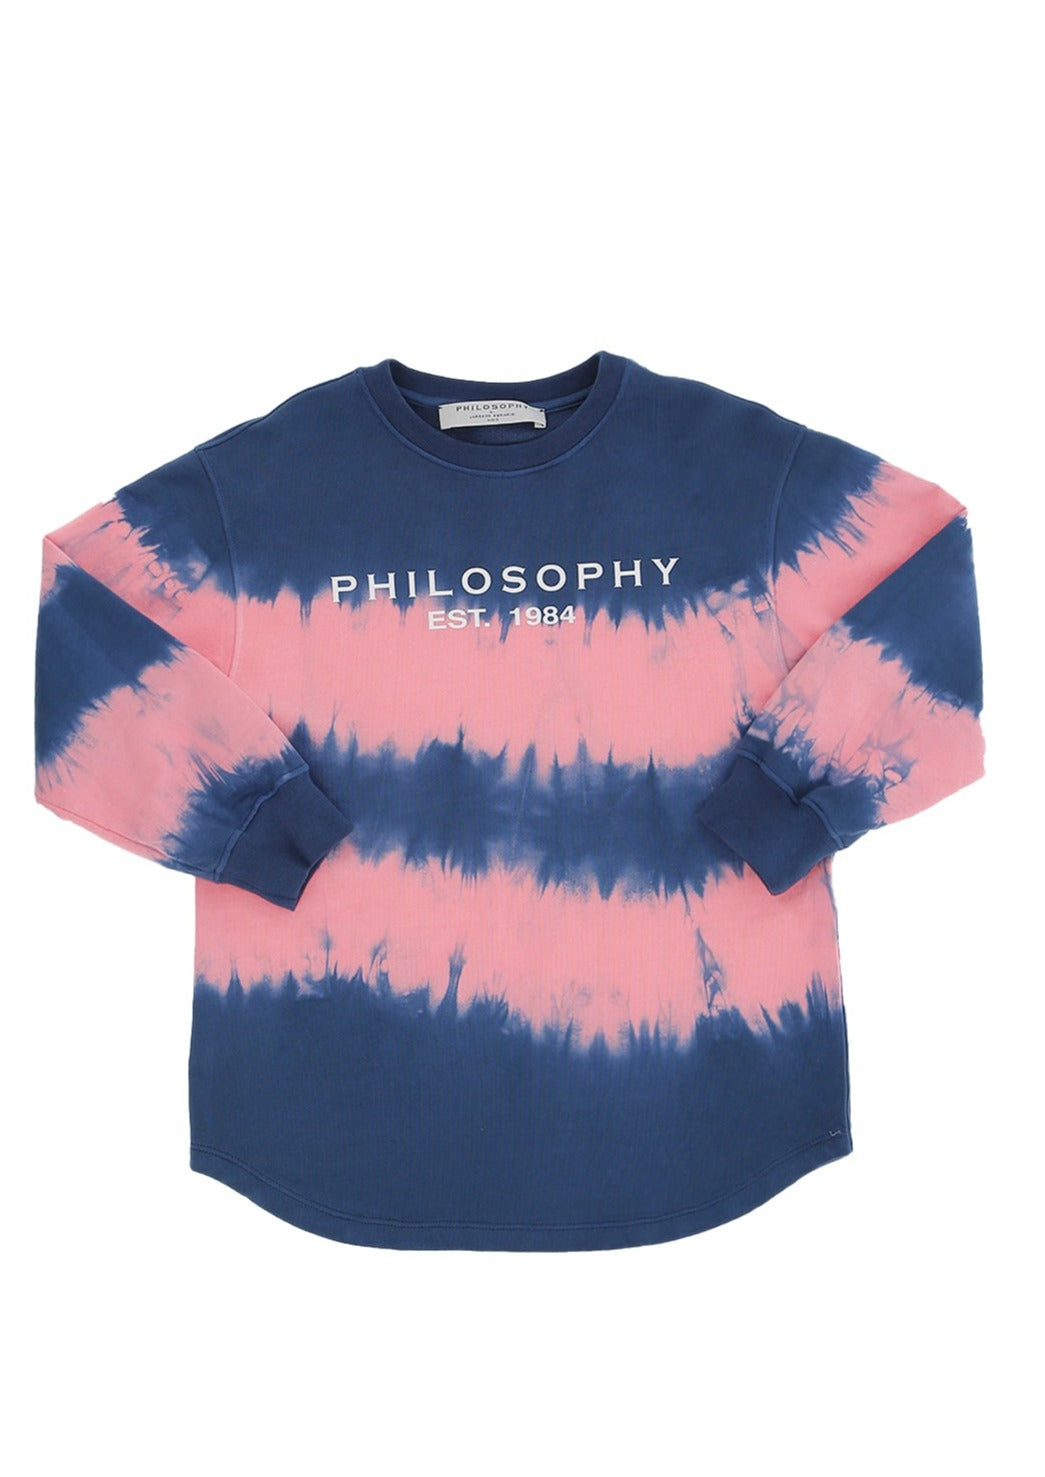 Philosophy Tie Dye Sweatshirt